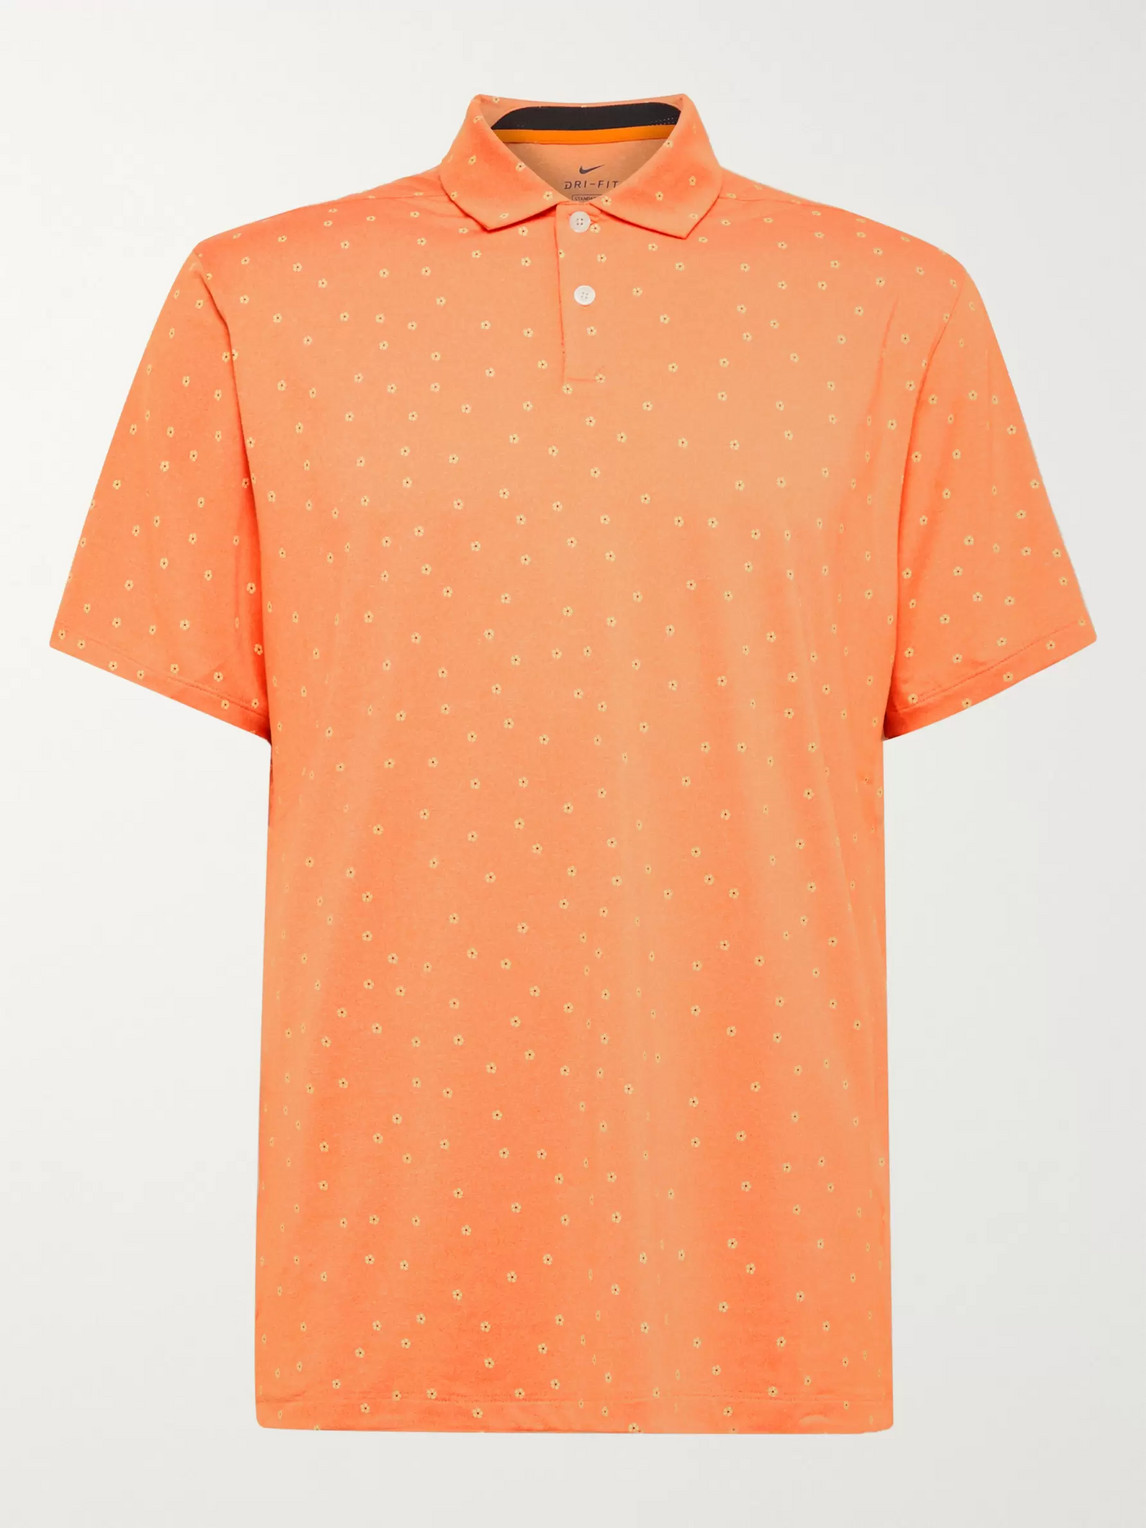 Nike Dri-fit Vapor Men's Printed Golf Polo (starfish) - Clearance Sale In Orange